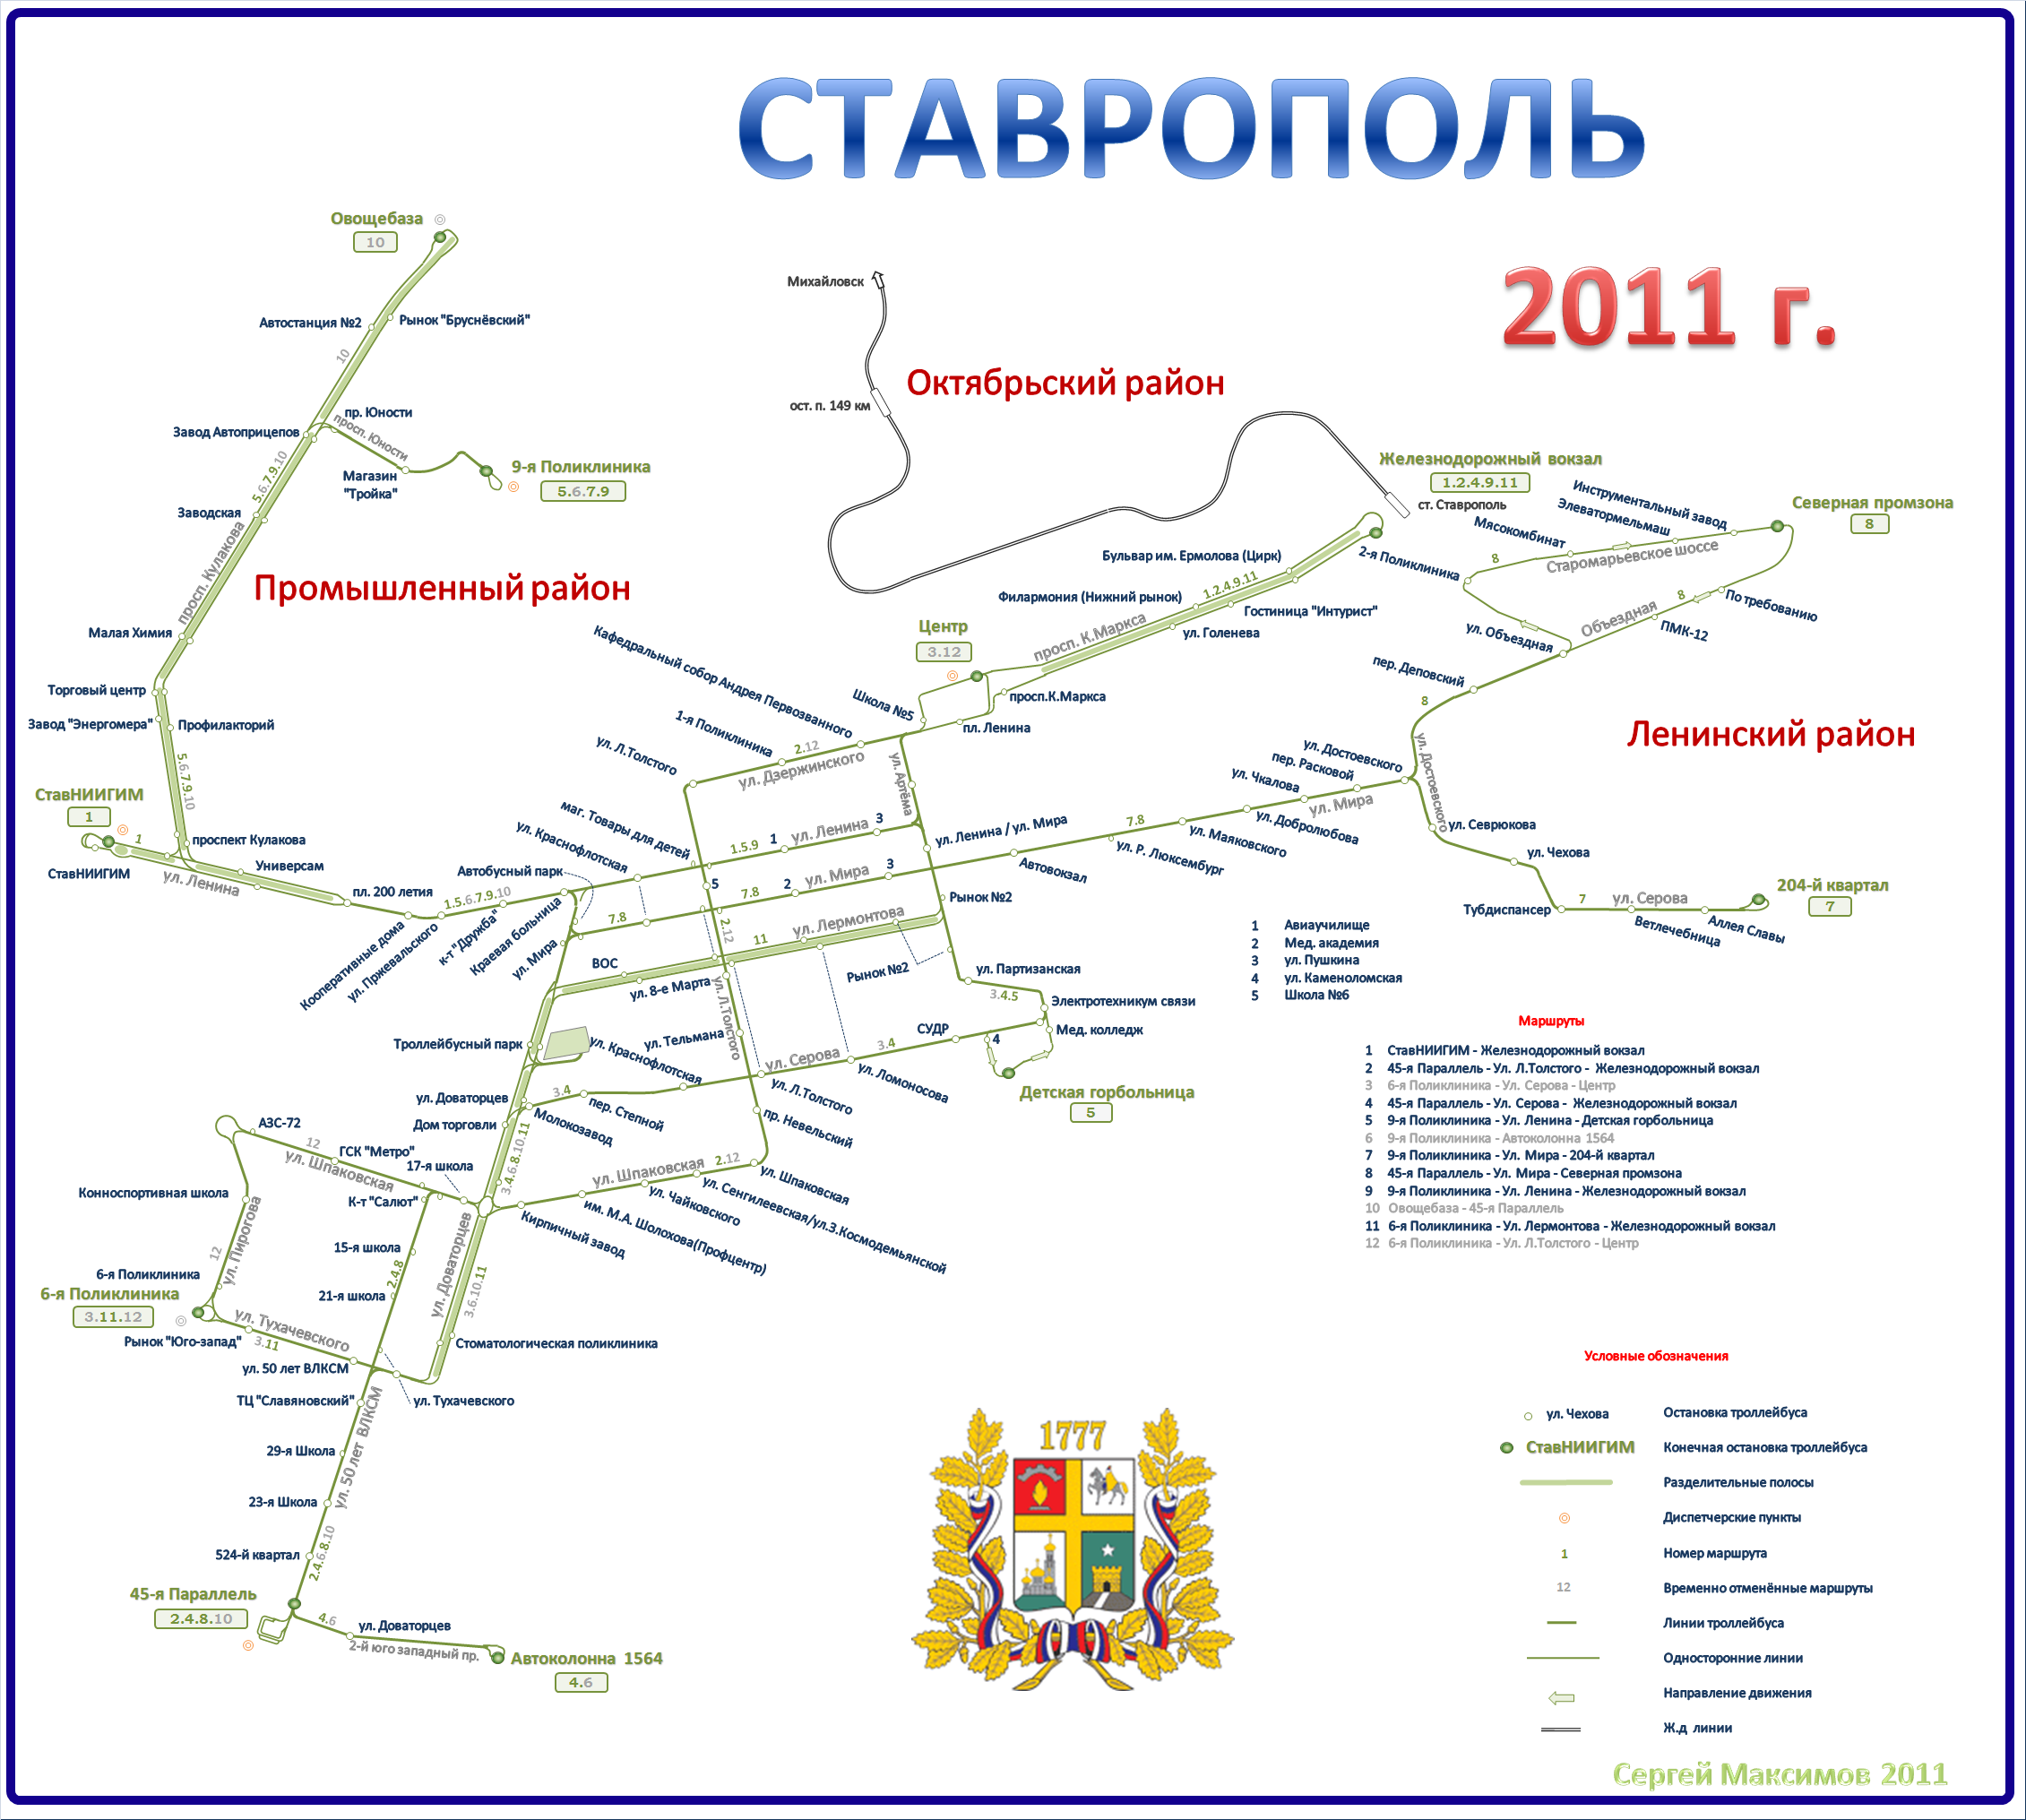 Sztavropol — Maps and Plans